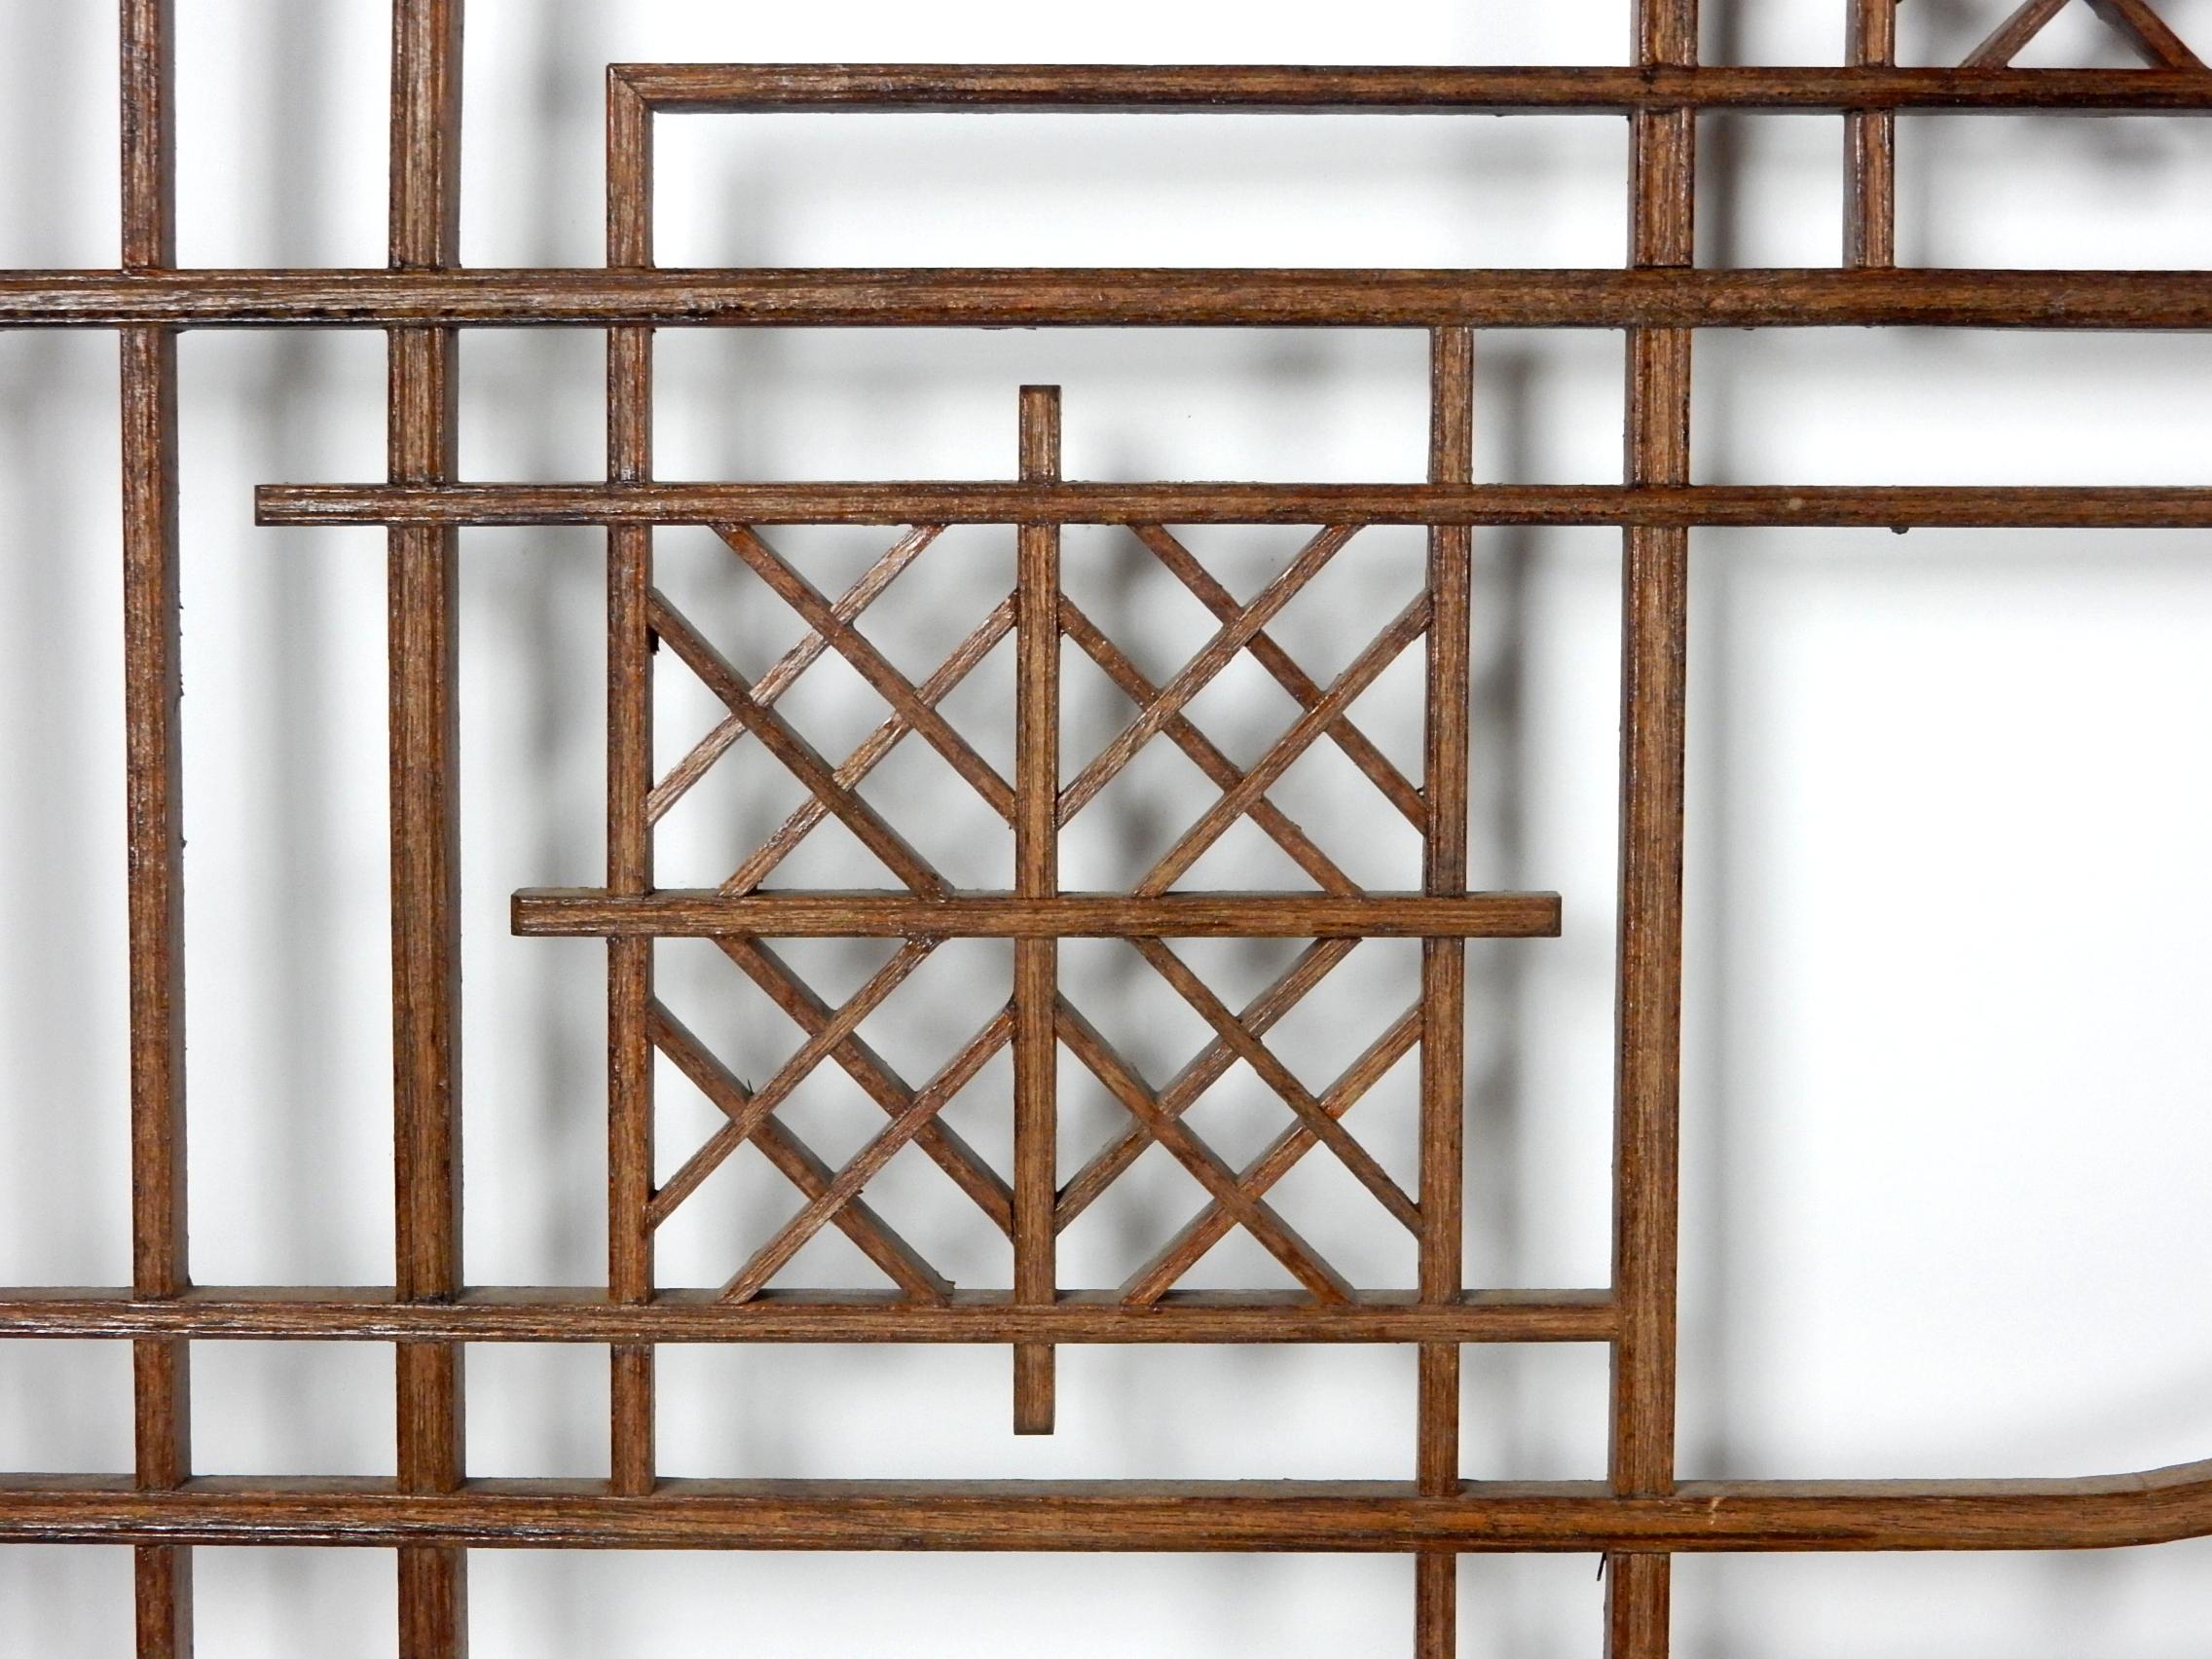 Arts and Crafts Arts & Crafts Era Geometric Wood Inlay Window Panel Screen Frank Lloyd Wright For Sale